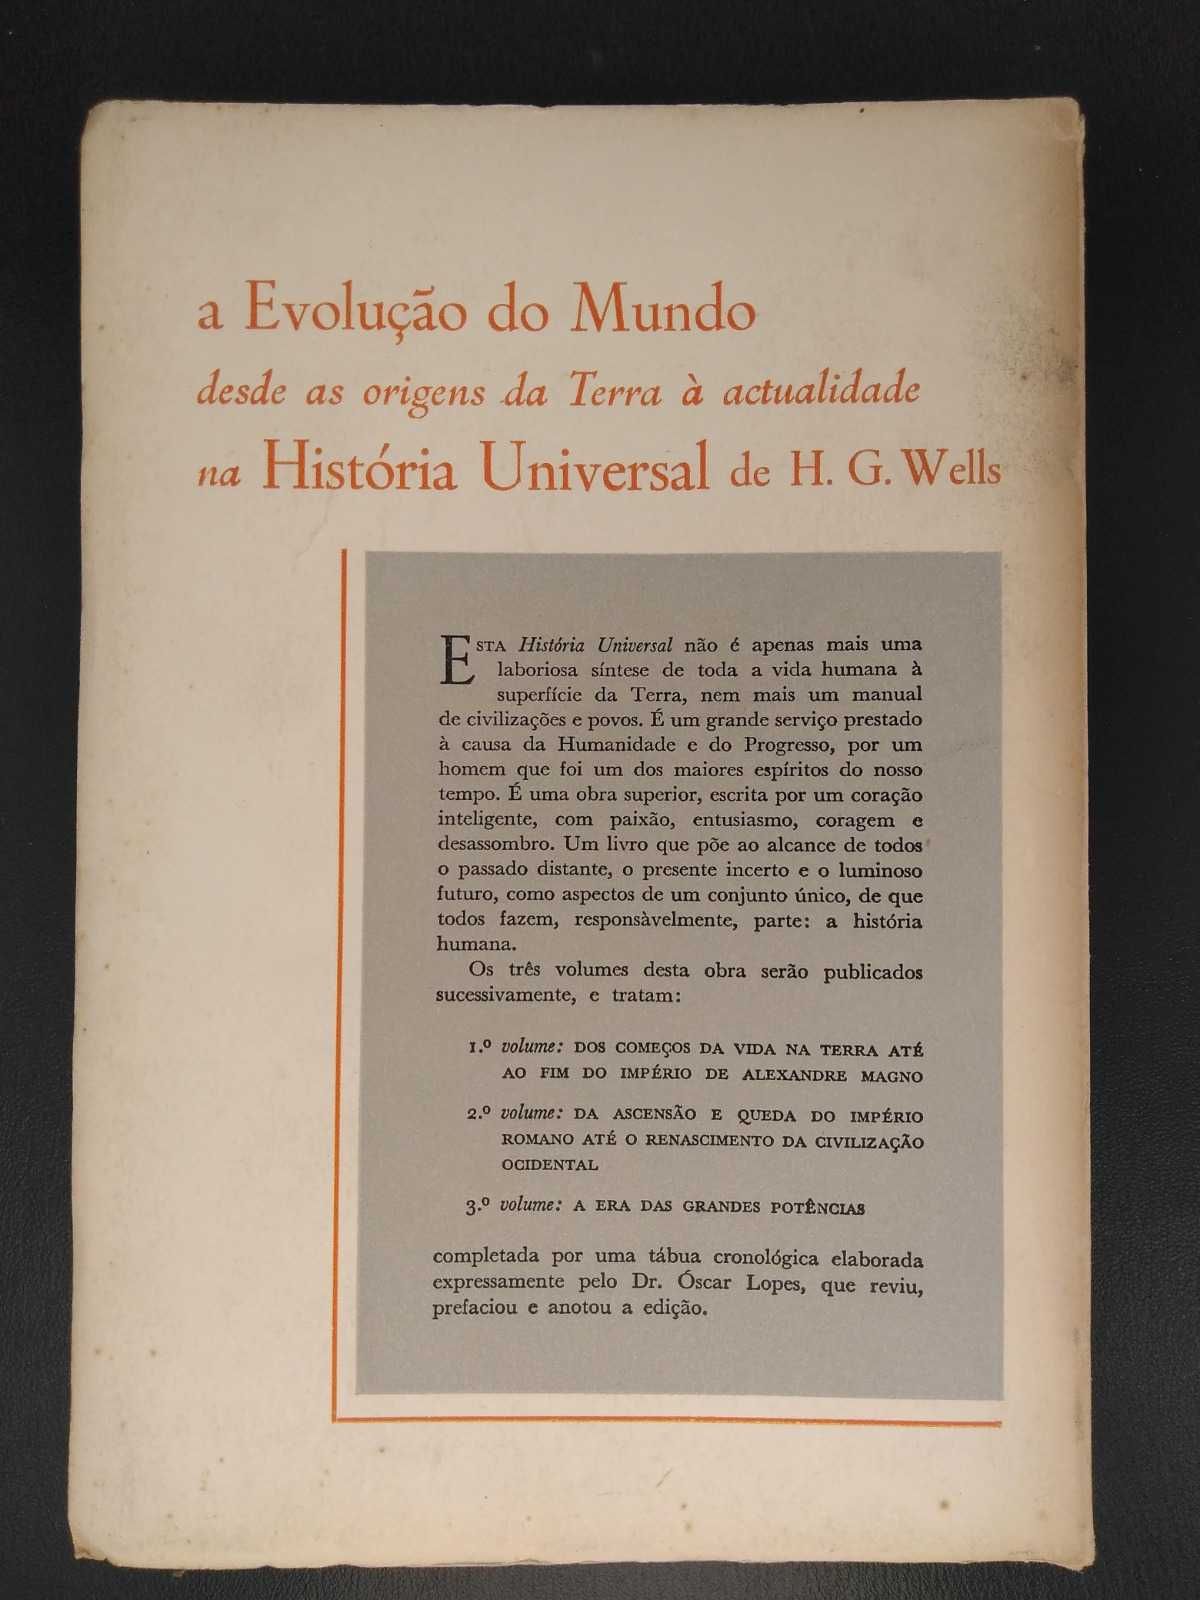 livros: H. G. Wells "História universal"